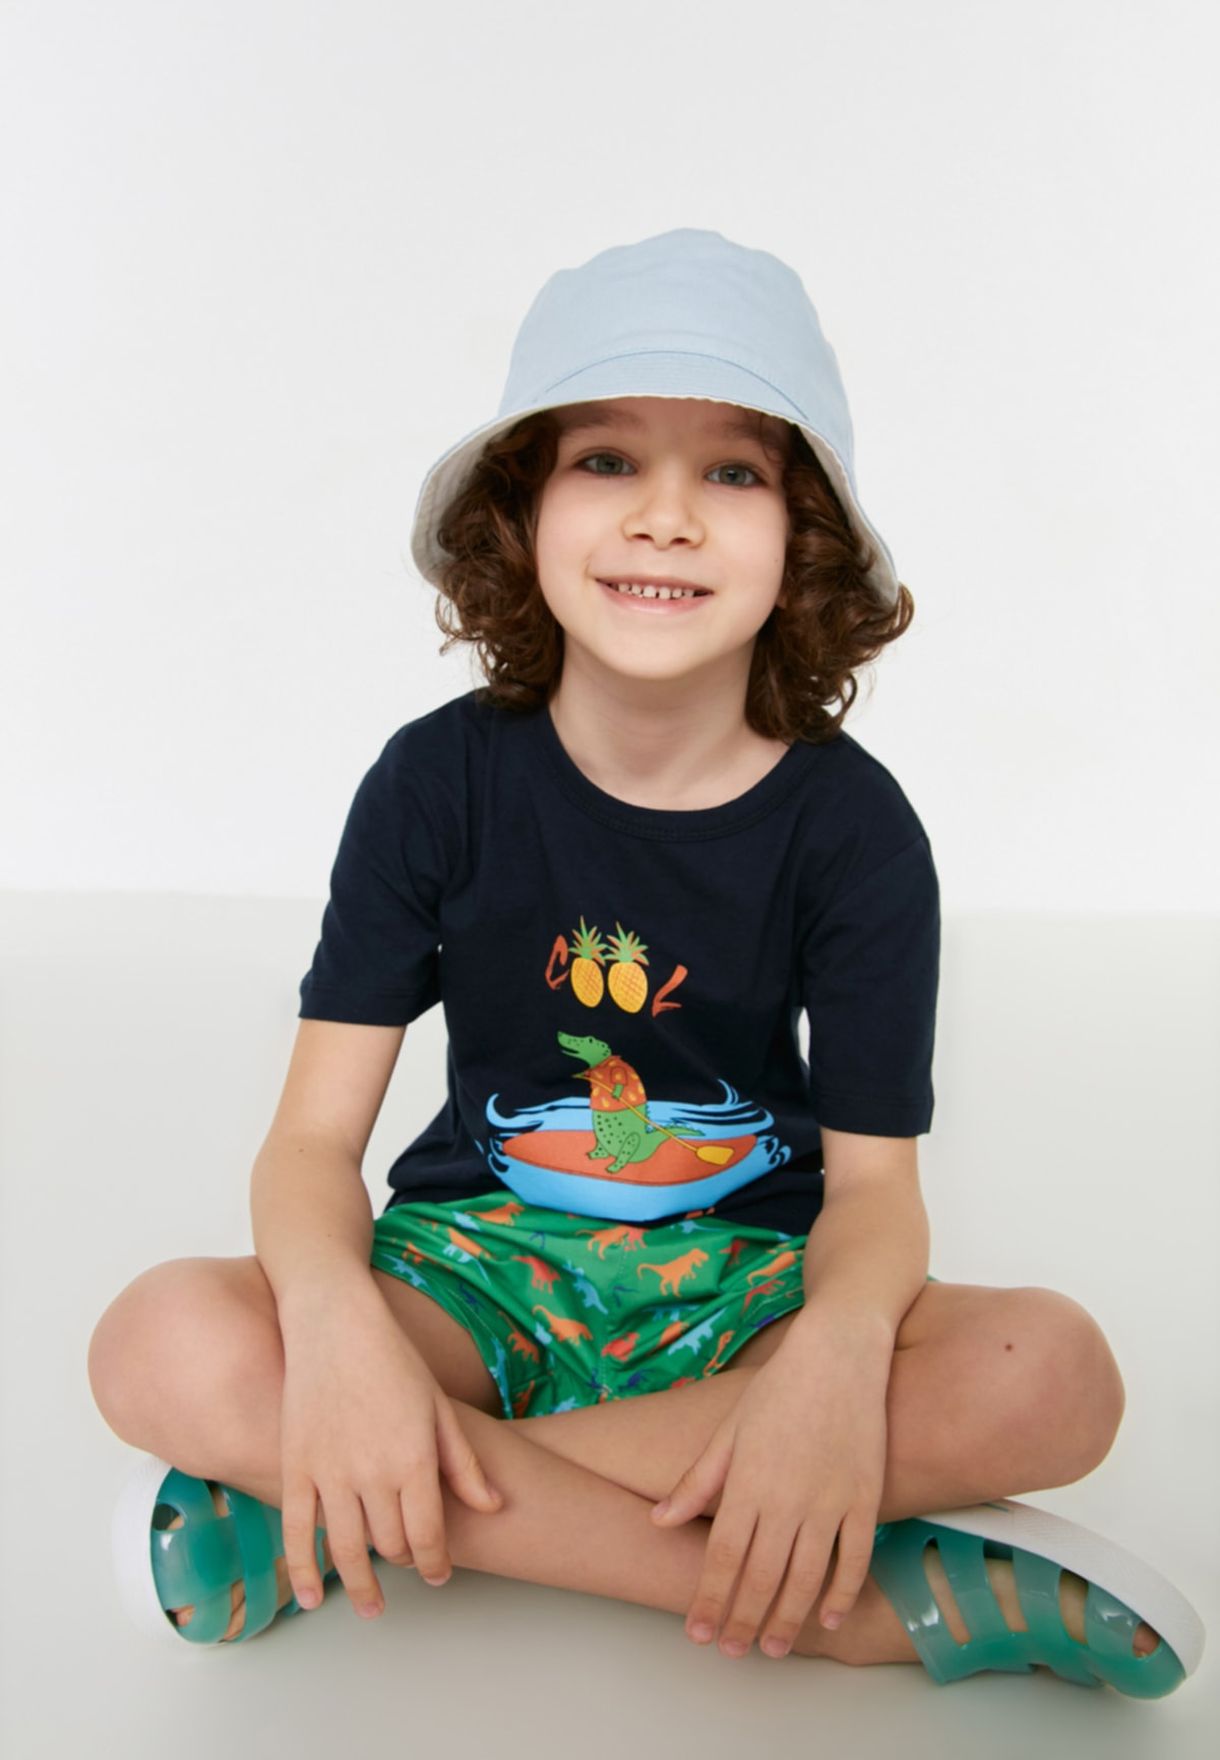 Kids Croc Print T-Shirt